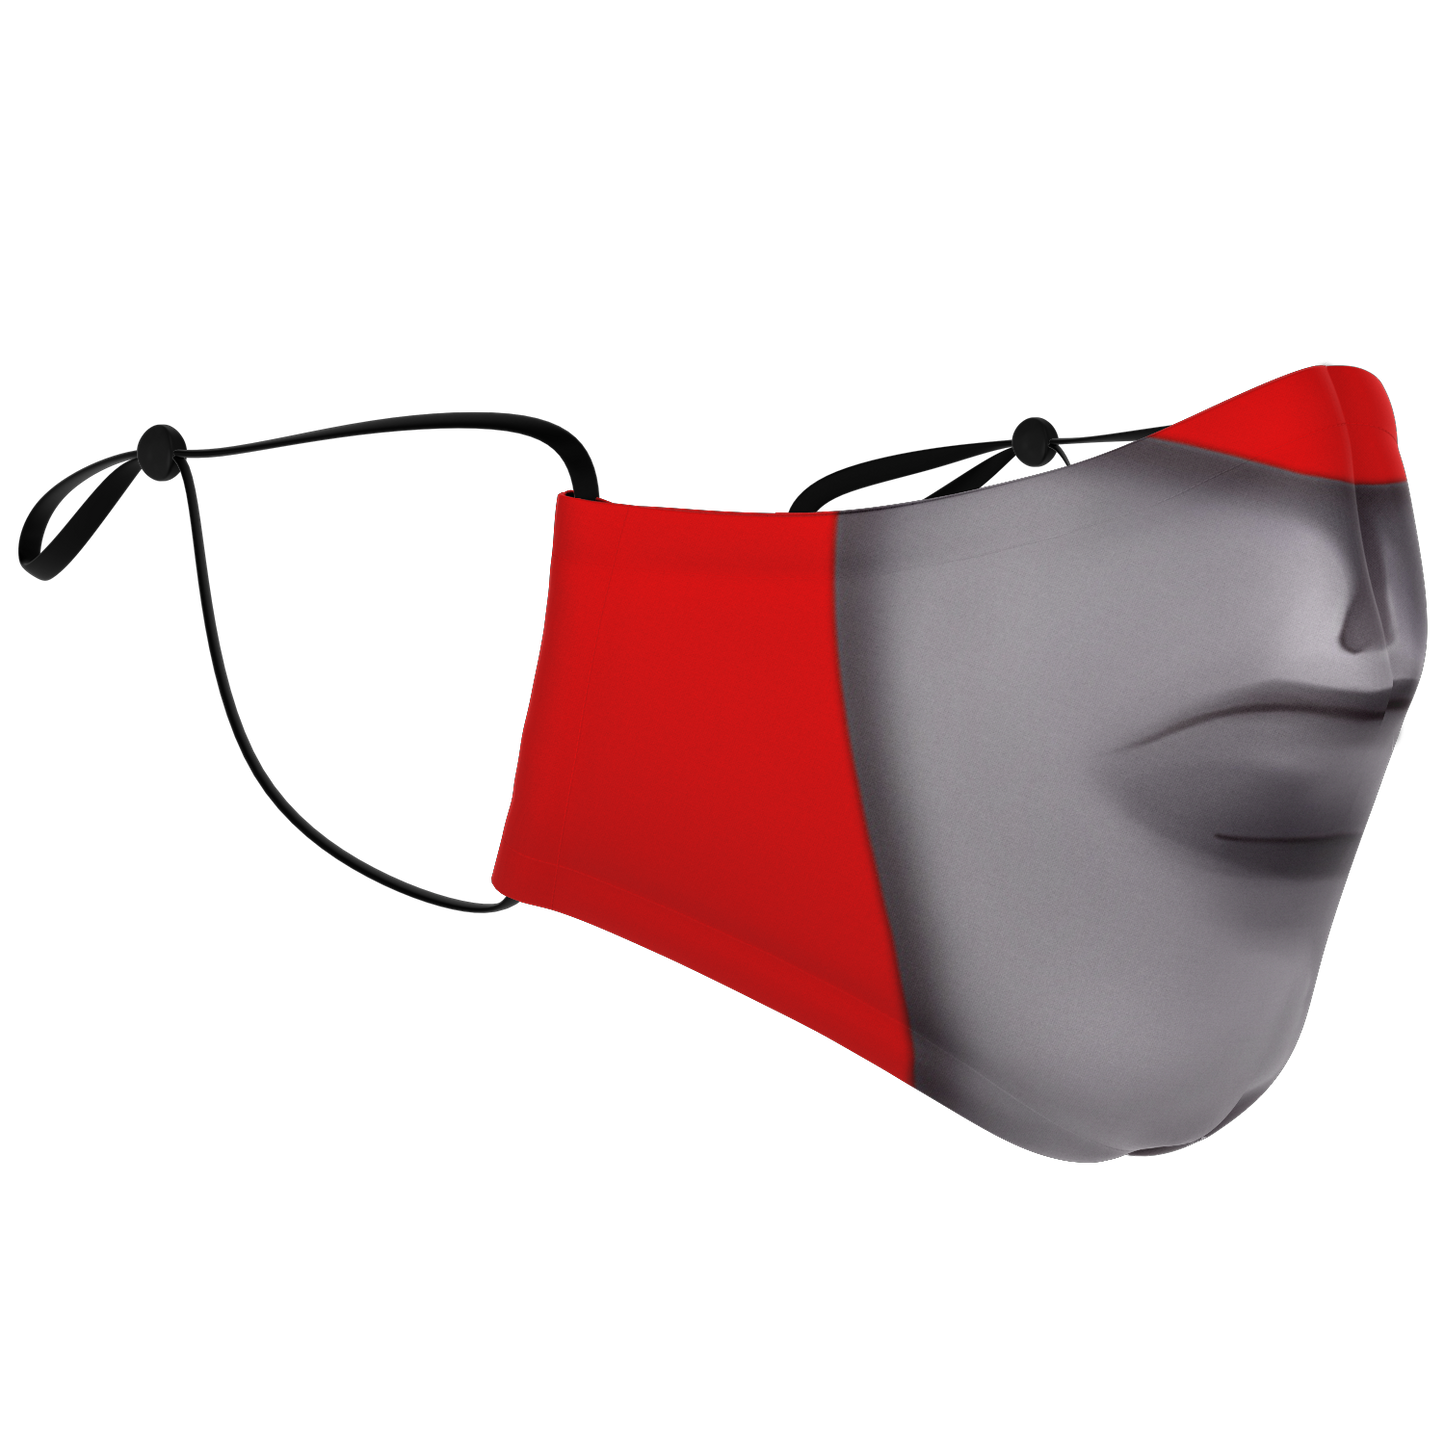 MMPR 'Red Ranger' Fashion Mask